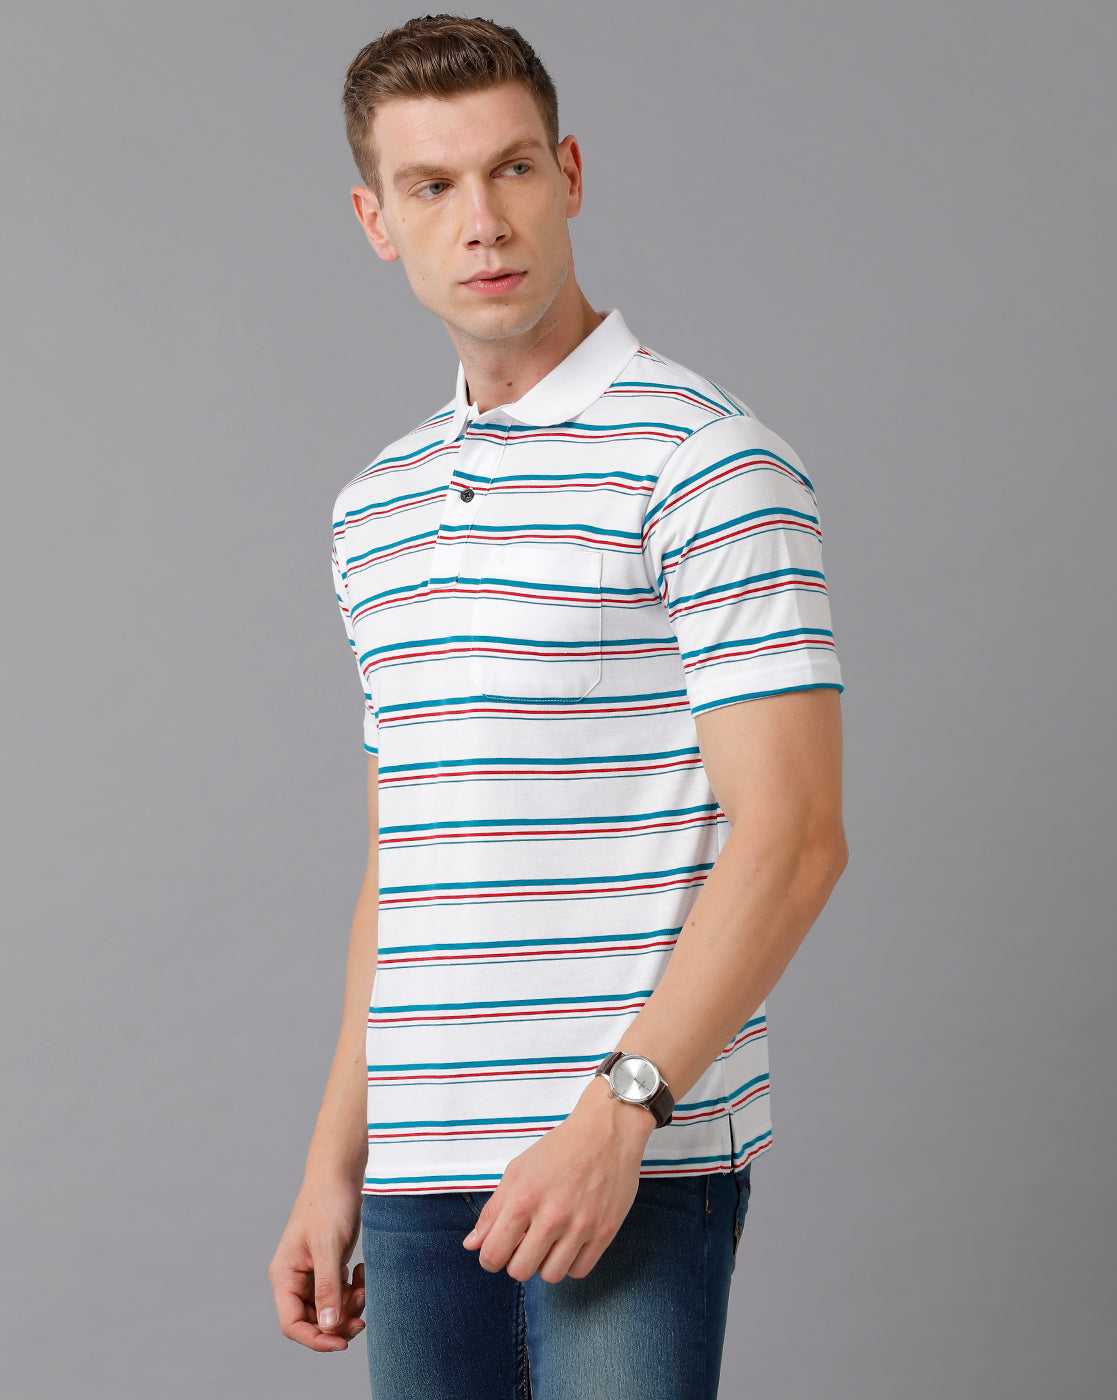 Classic Polo Men's Cotton Blend Striped Authentic Fit White T-Shirt | Avon - 495 A